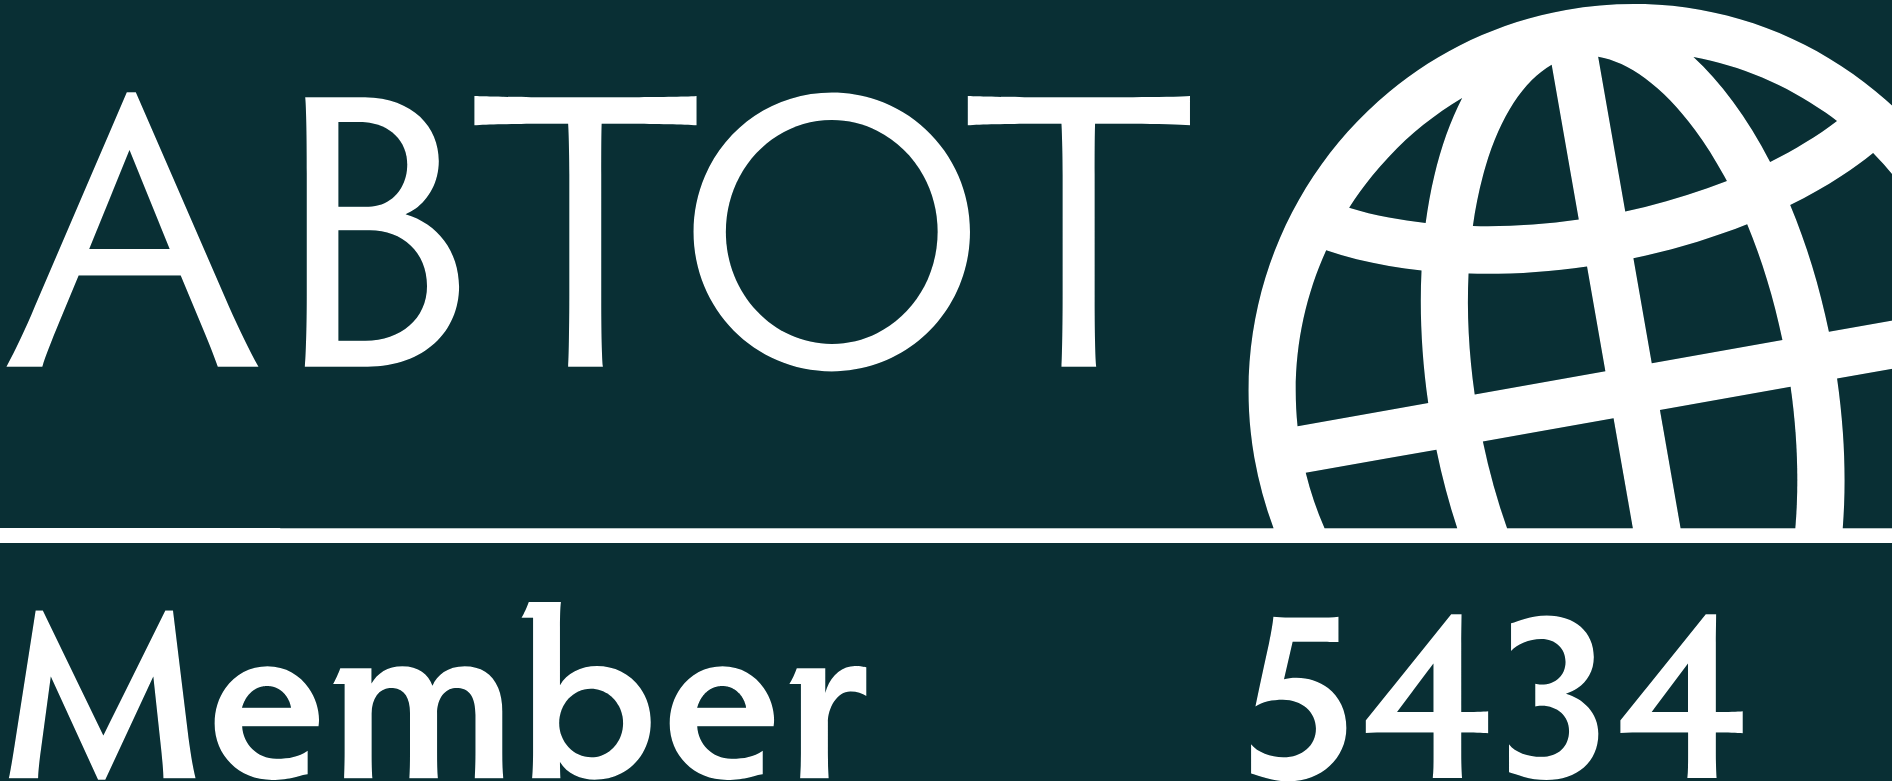 Abtot logo